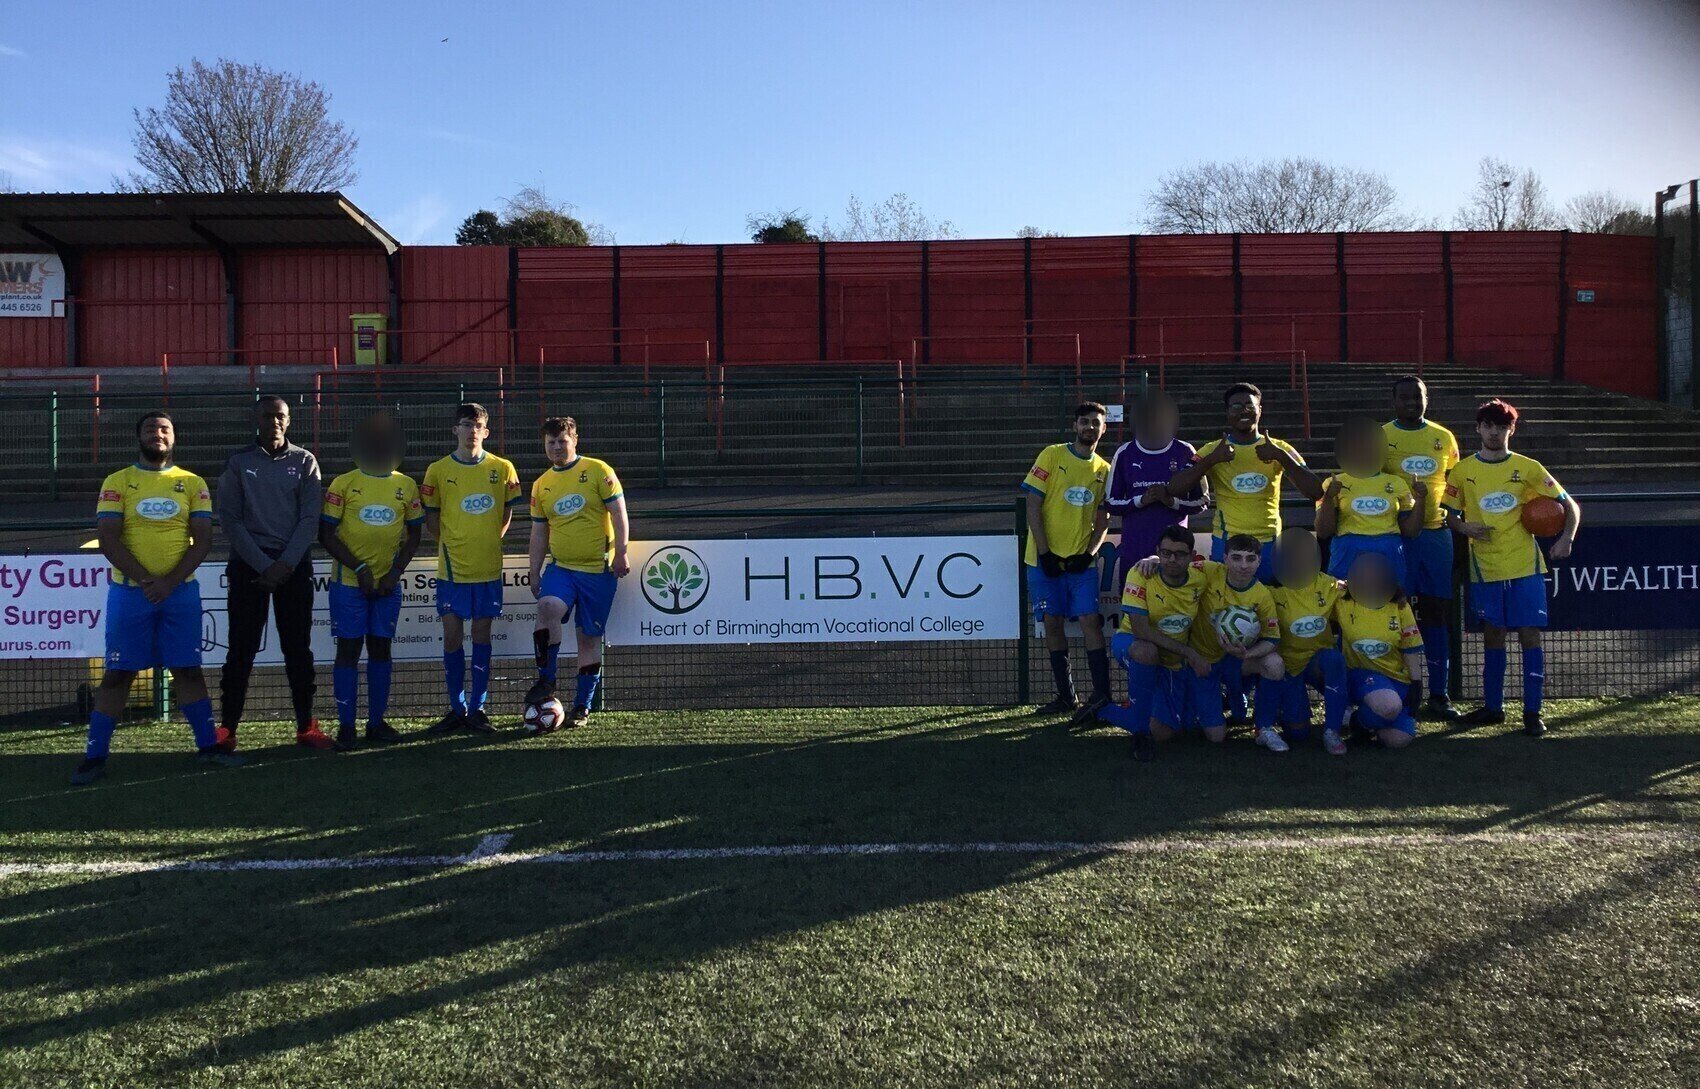 The HBVC Football Team